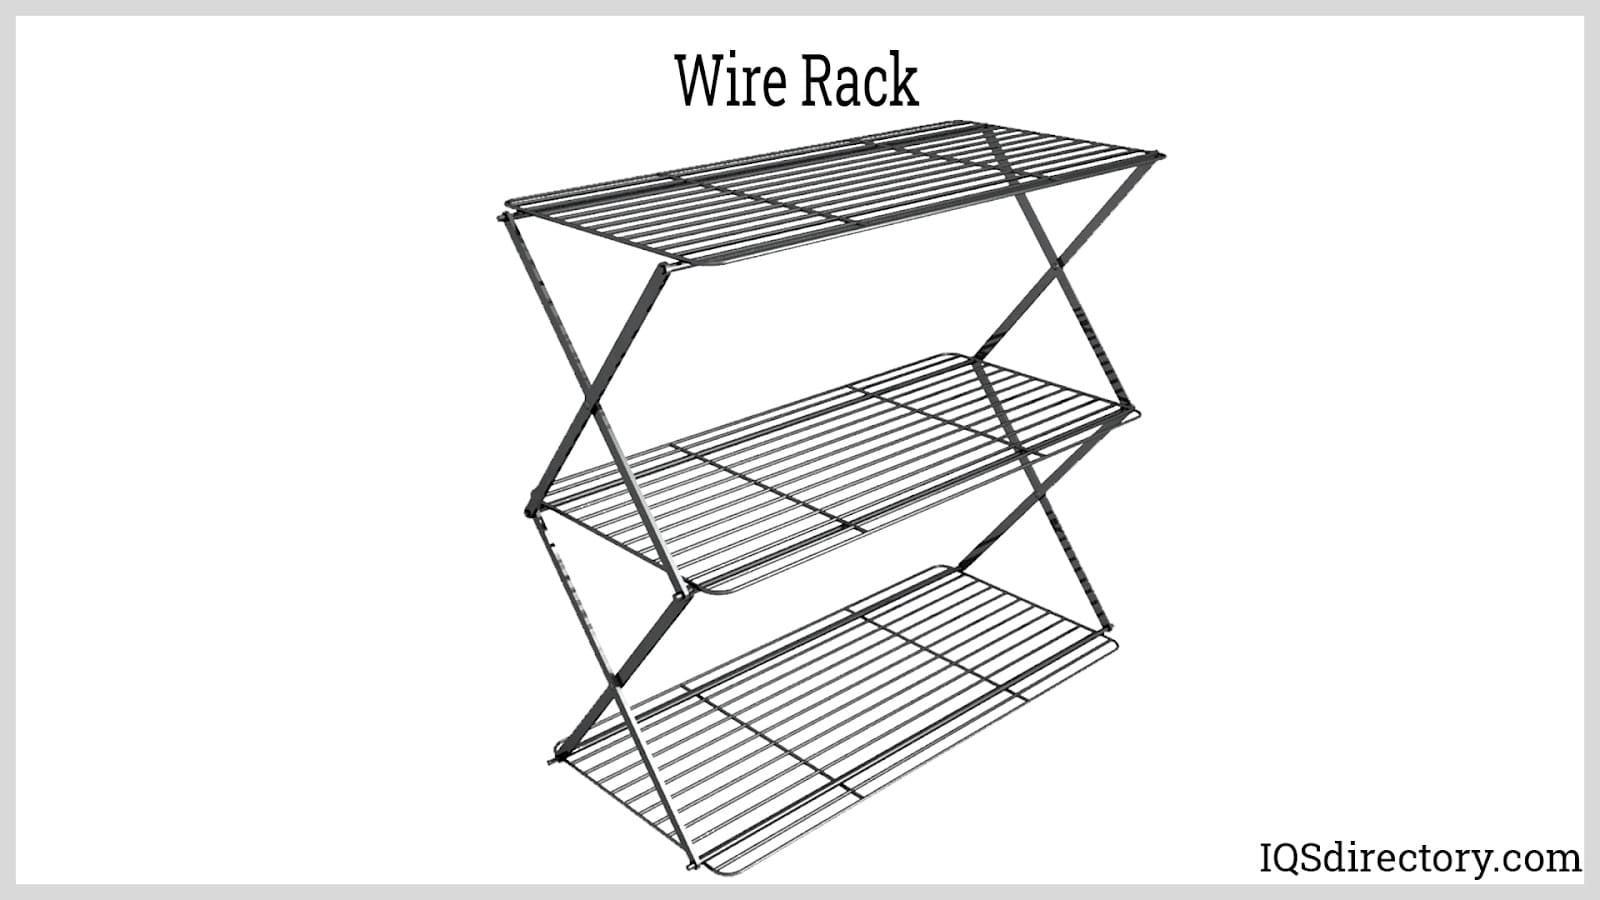 https://www.iqsdirectory.com/articles/wire-form/wire-racks/wire-rack.jpg